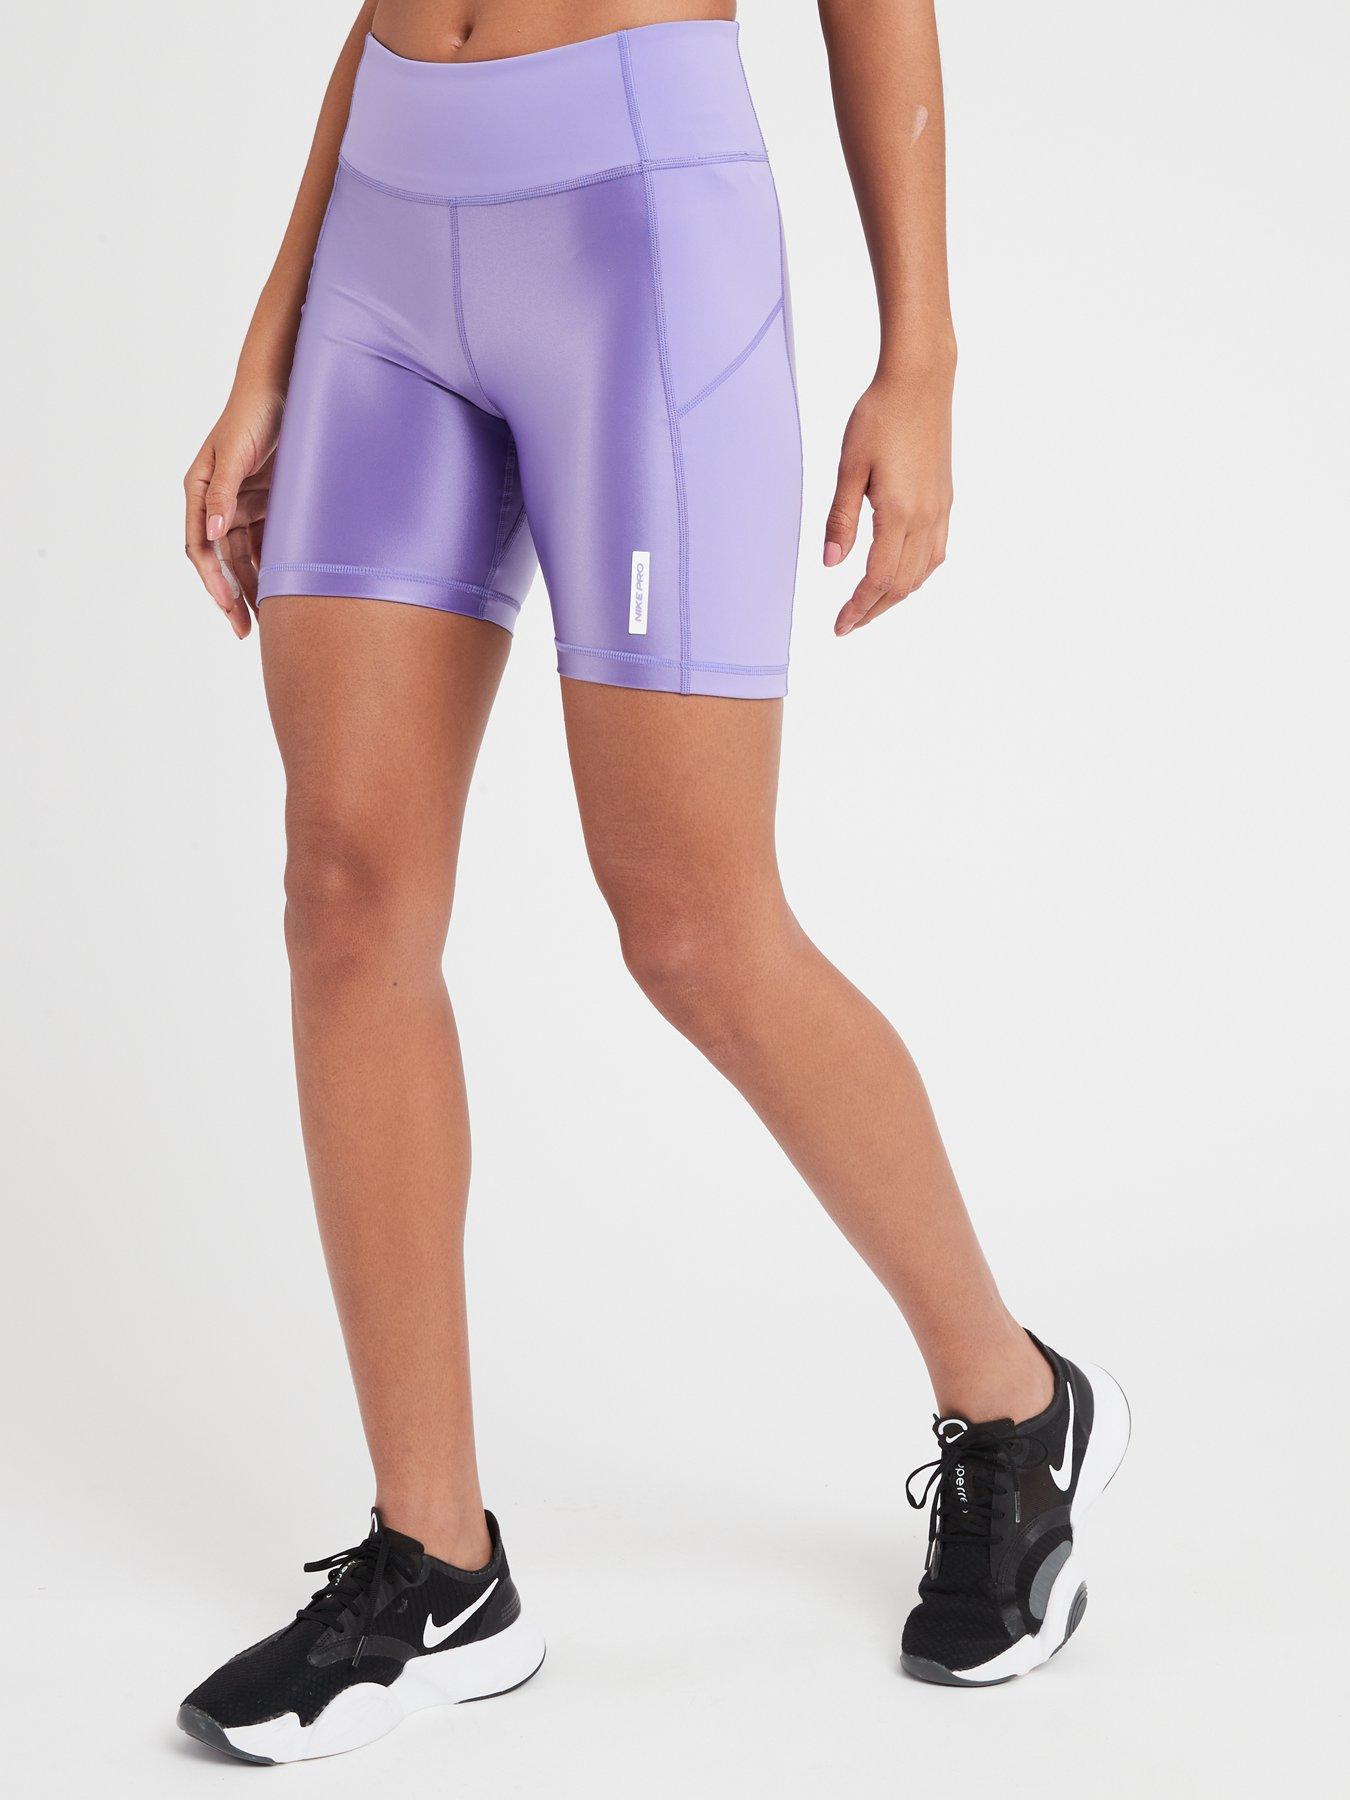 Nike Pro Shorts & Sports Bra Set Purple - $30 (57% Off Retail